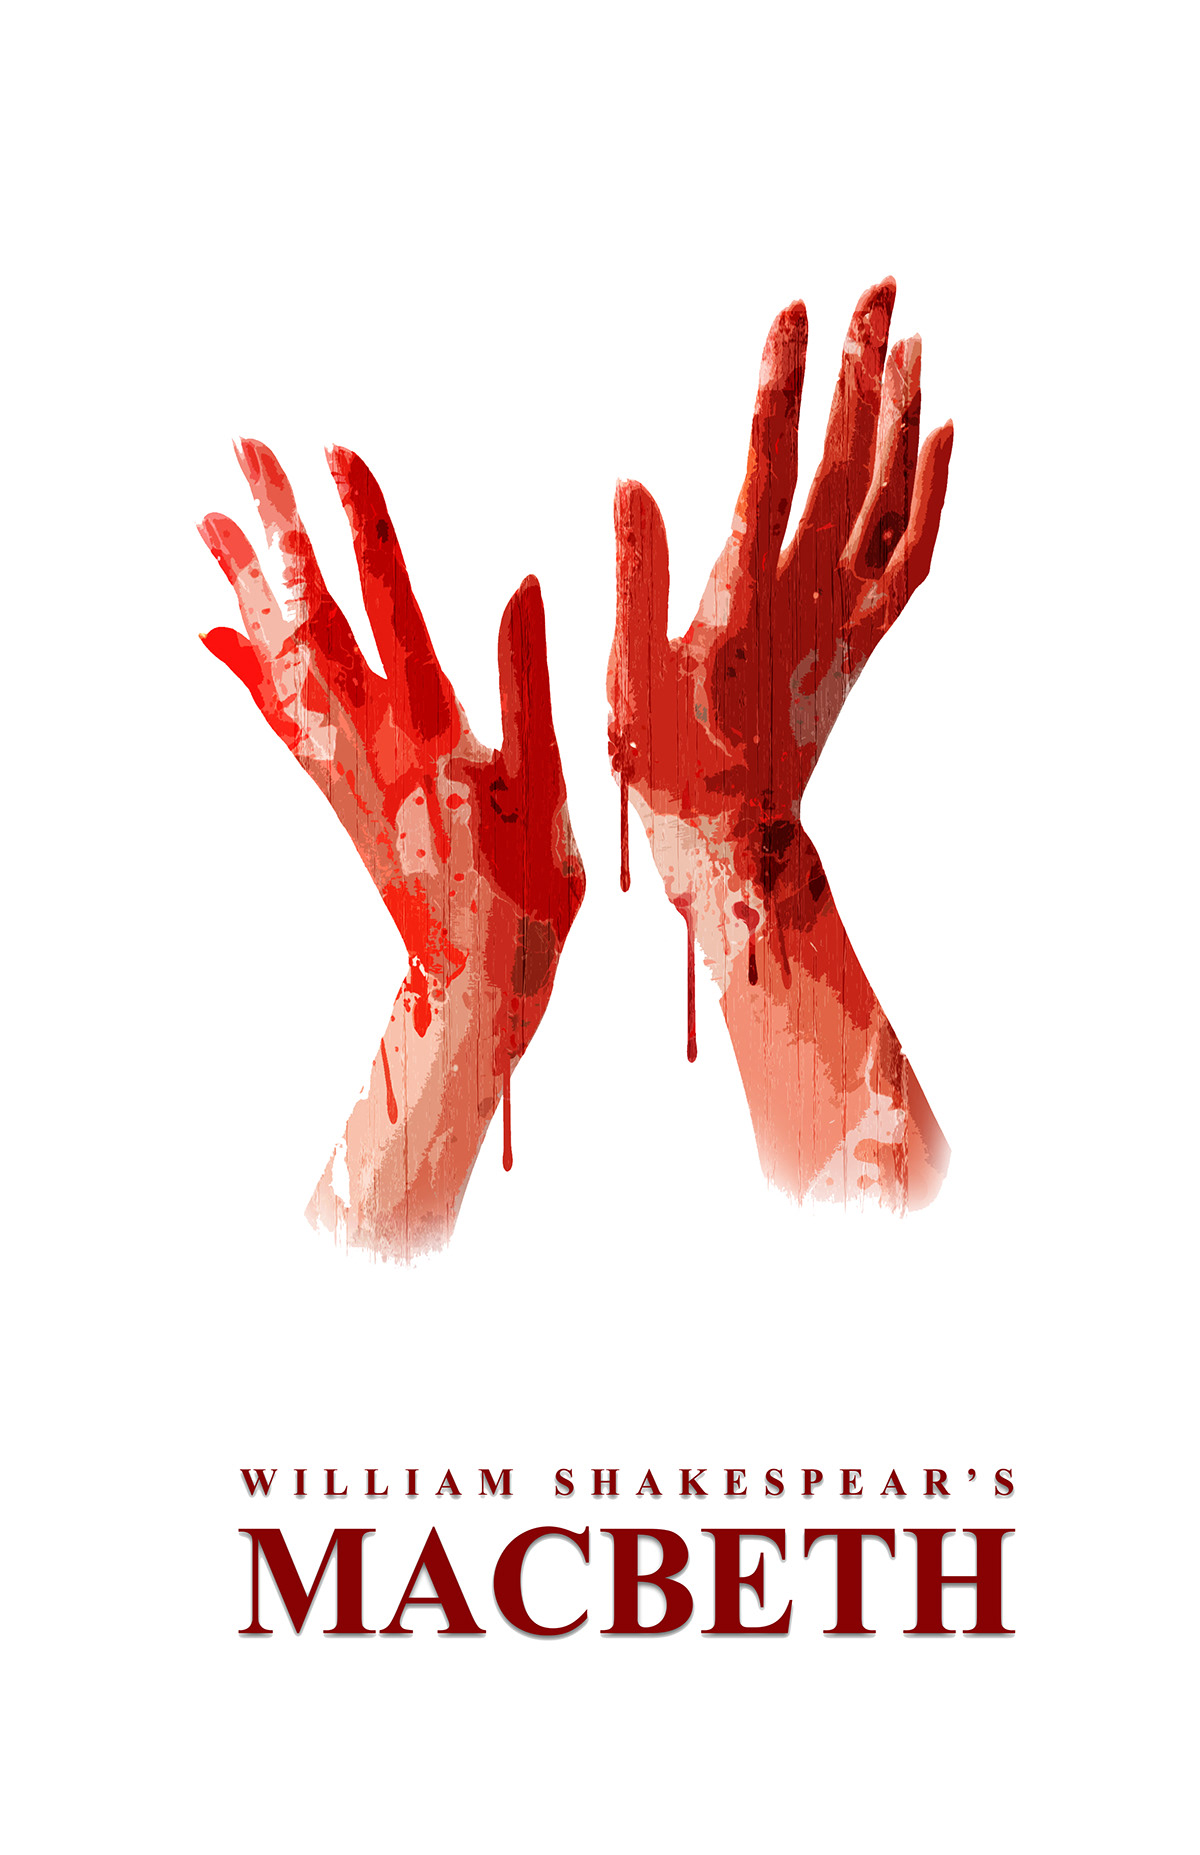 Macbeth poster blood movie type splatter red Shakespear william shakespeare play